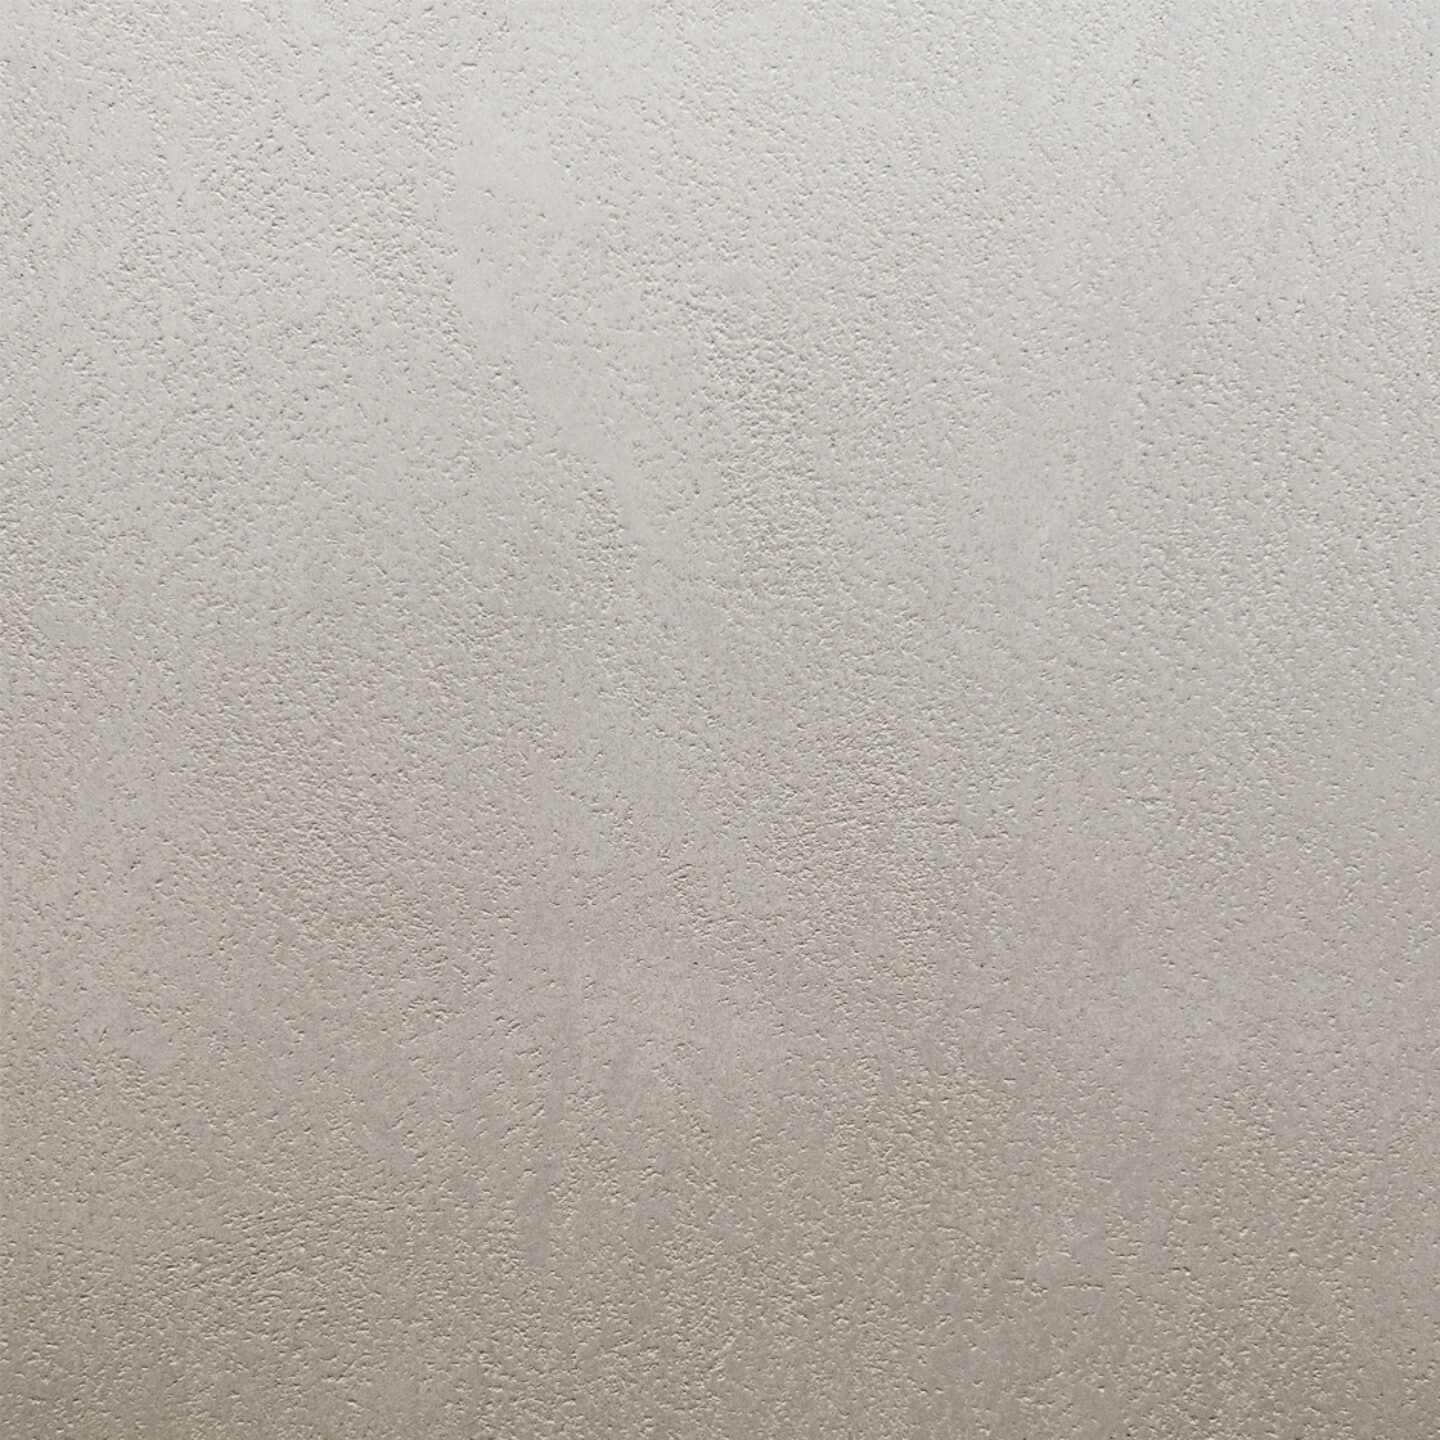 Close up of Armourcoat leatherstone exterior polished plaster finish - 14